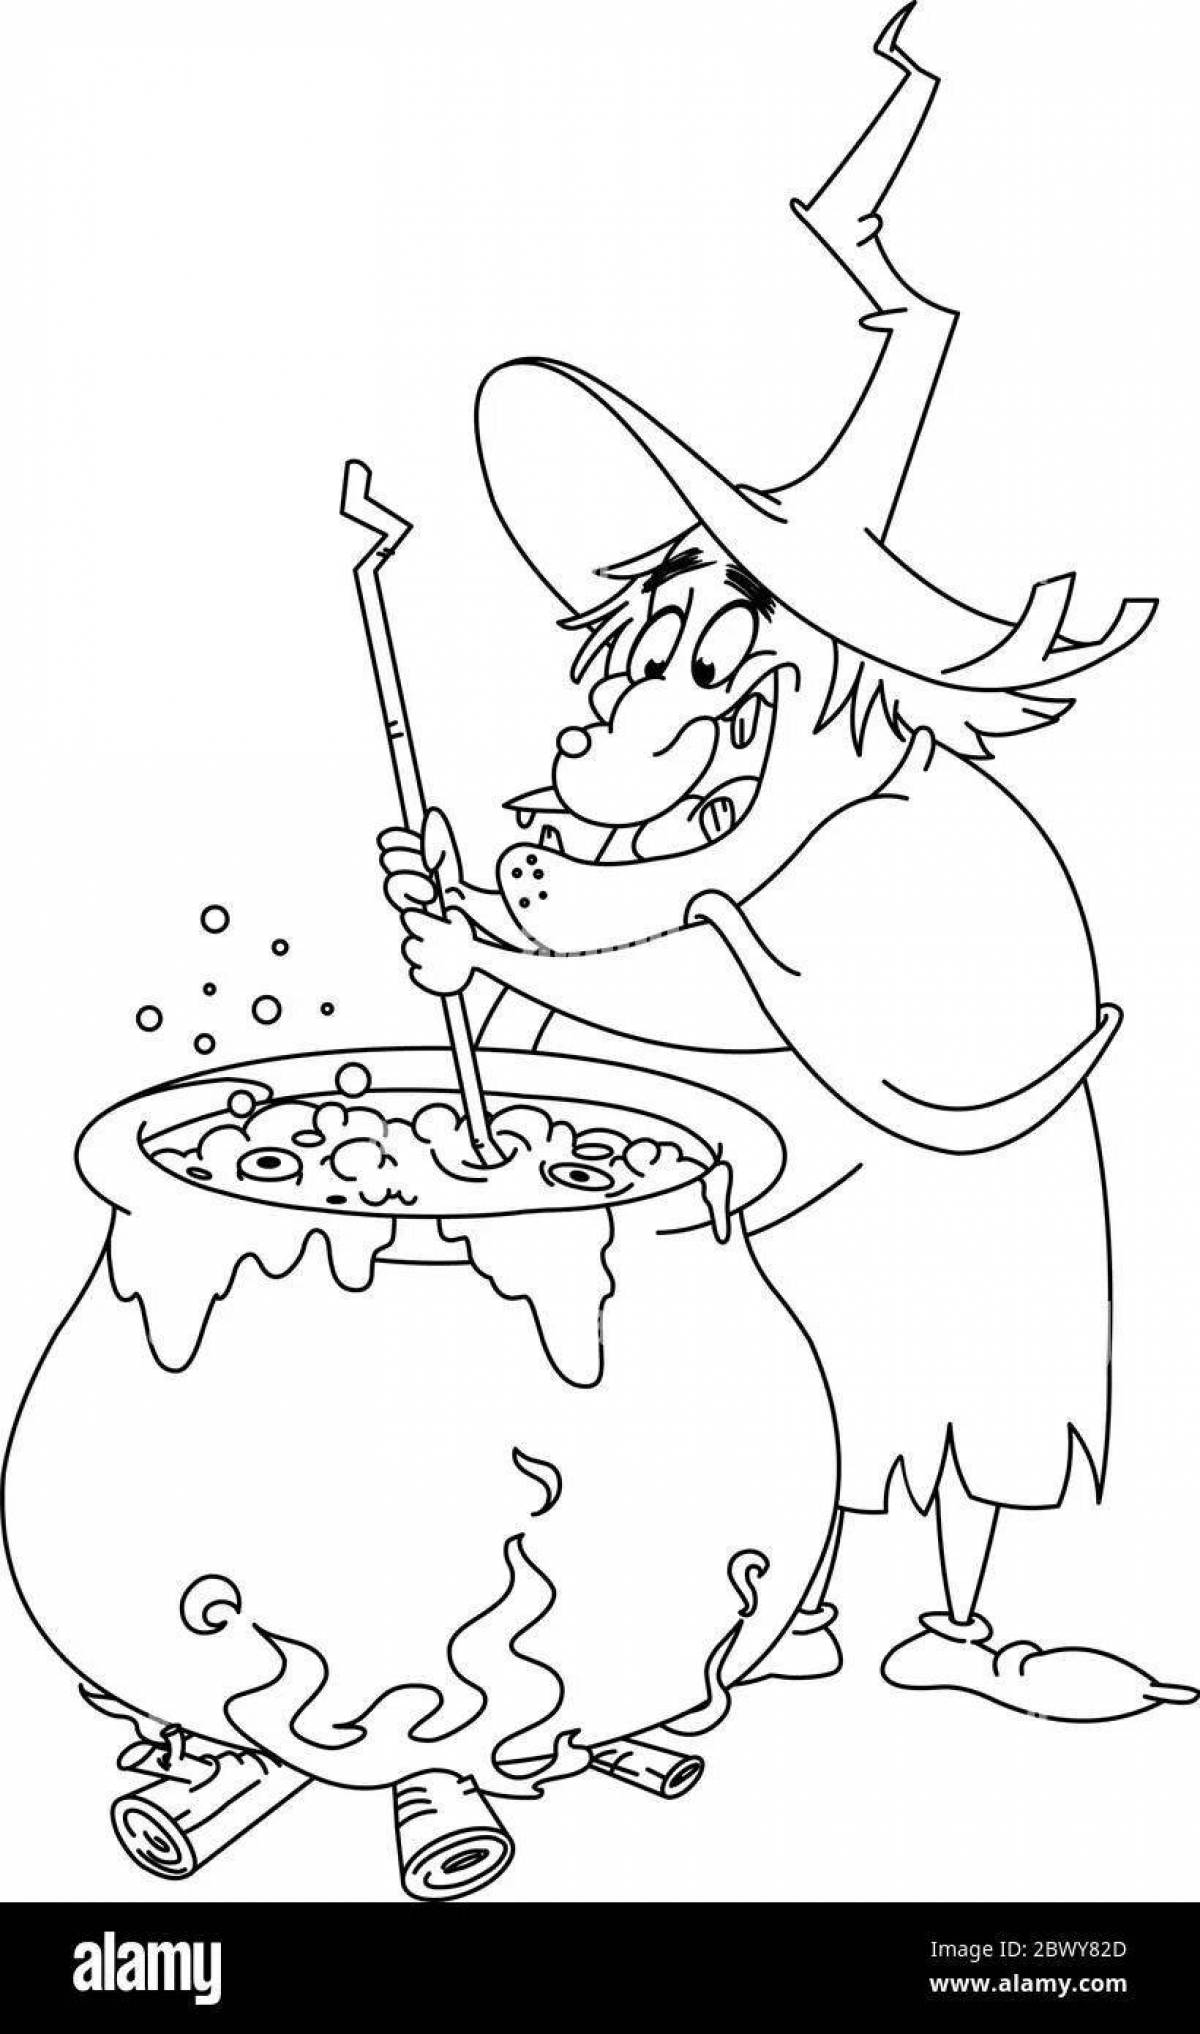 Coloring cute cauldron